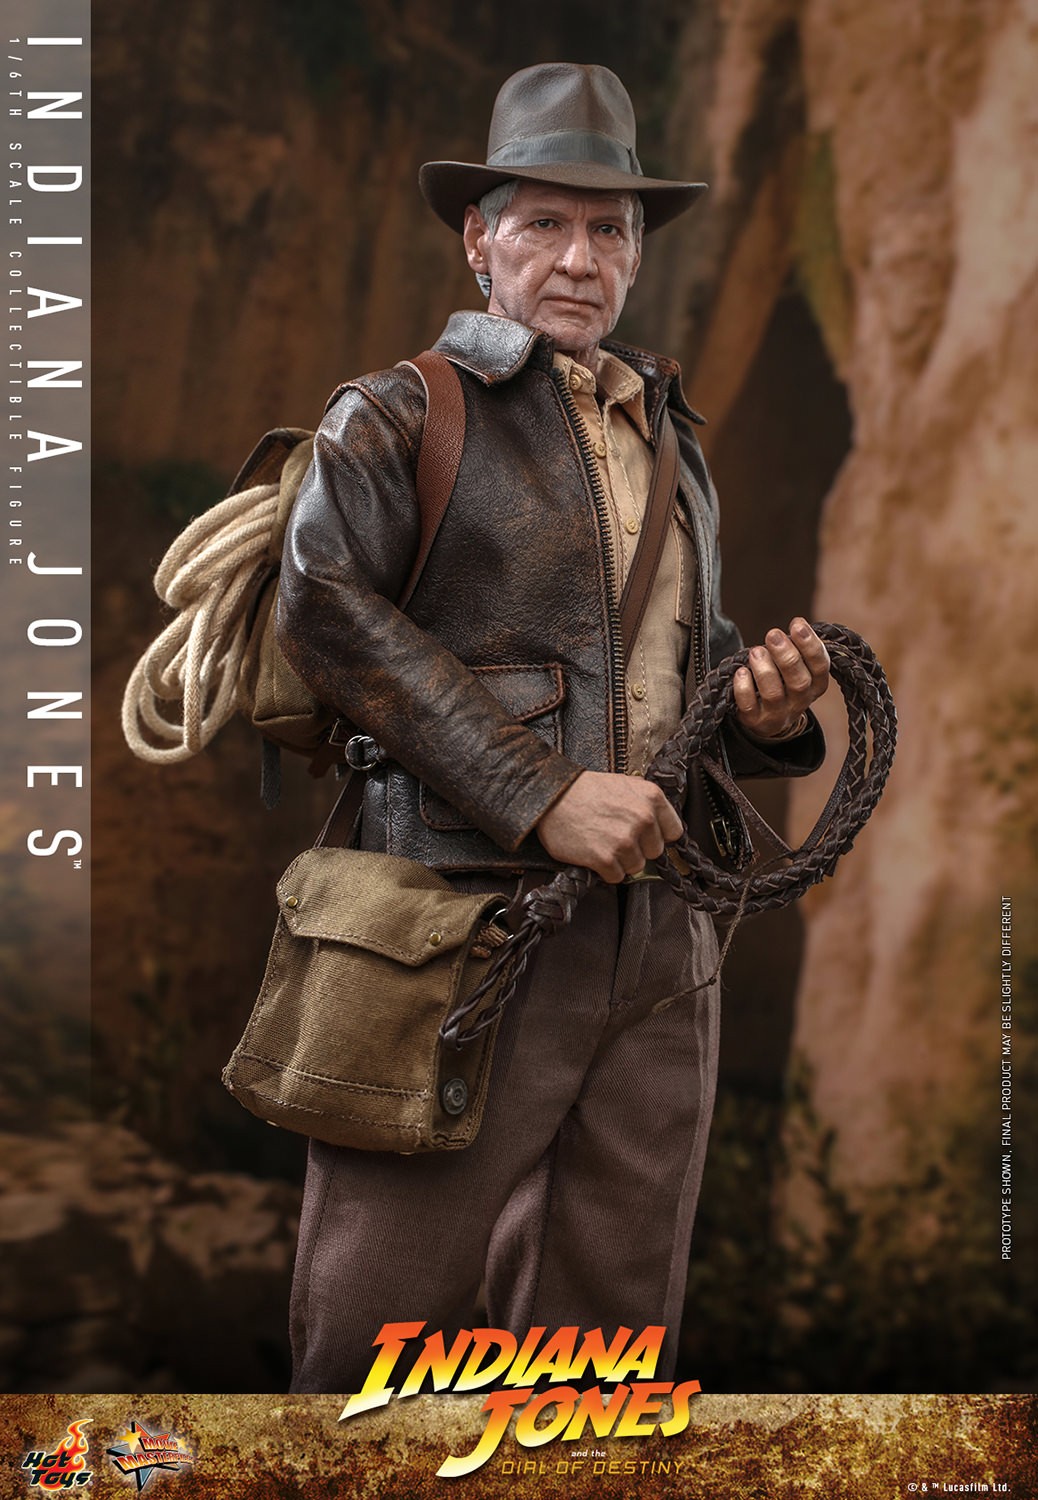 Indiana Jones Collector Edition (Prototype Shown) View 10